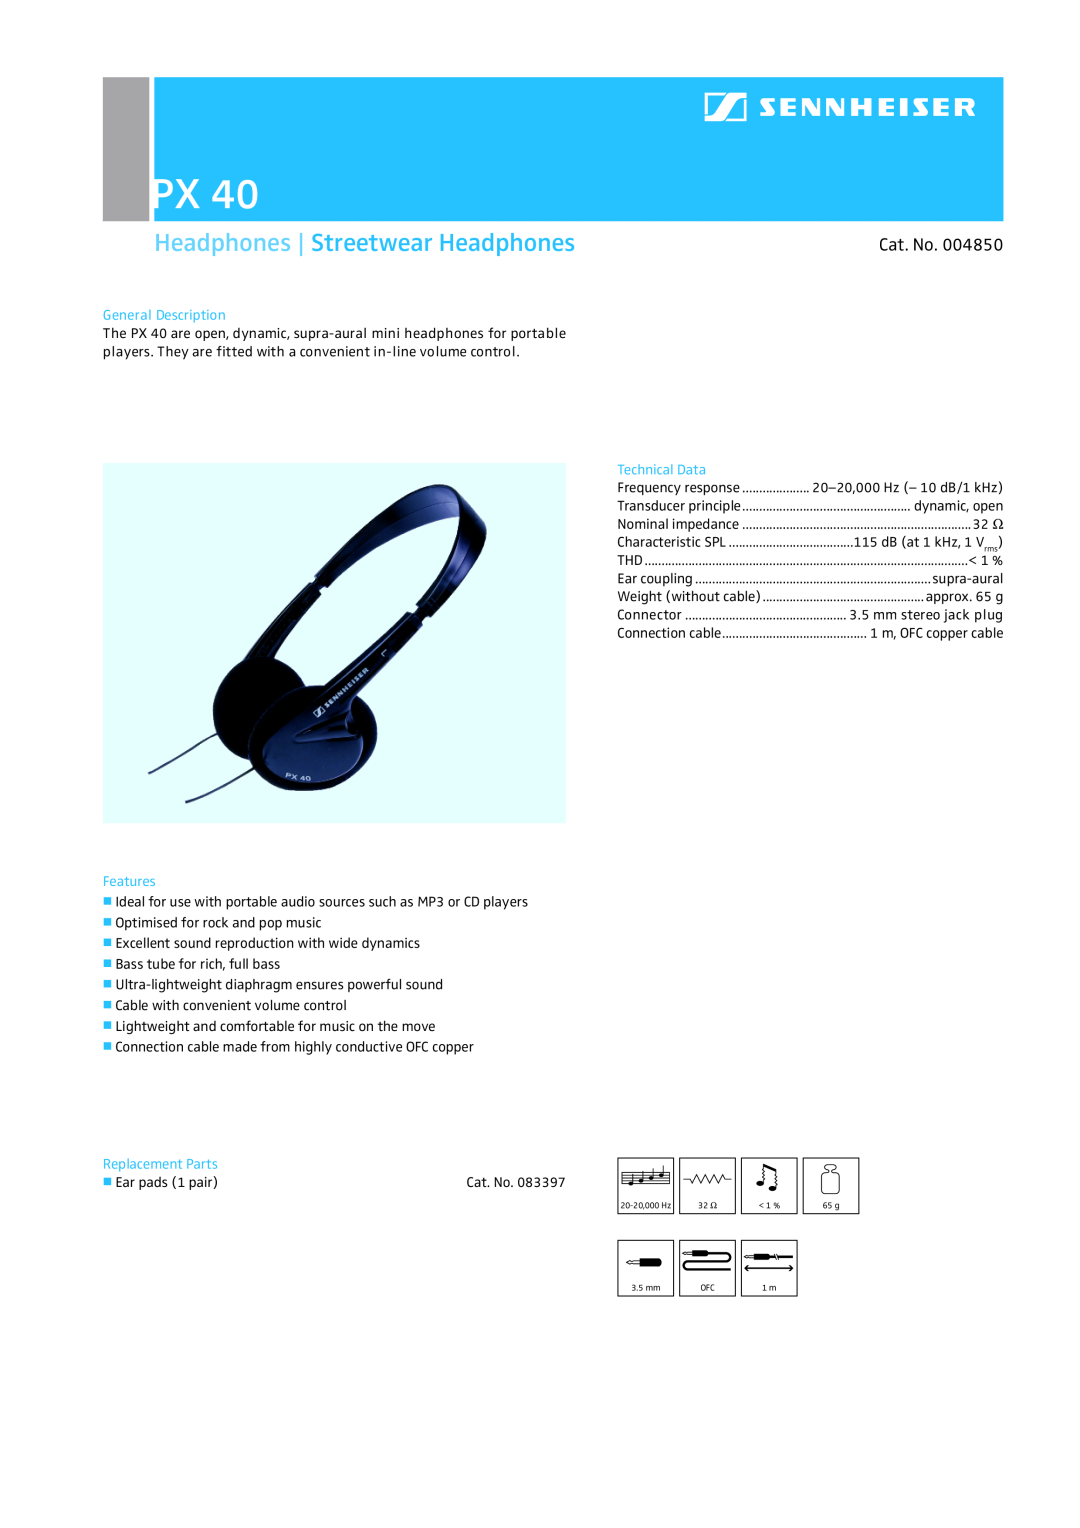 Sennheiser PX 40 manual Headphones Streetwear Headphones, Cat. No, General Description, Technical Data, Features 